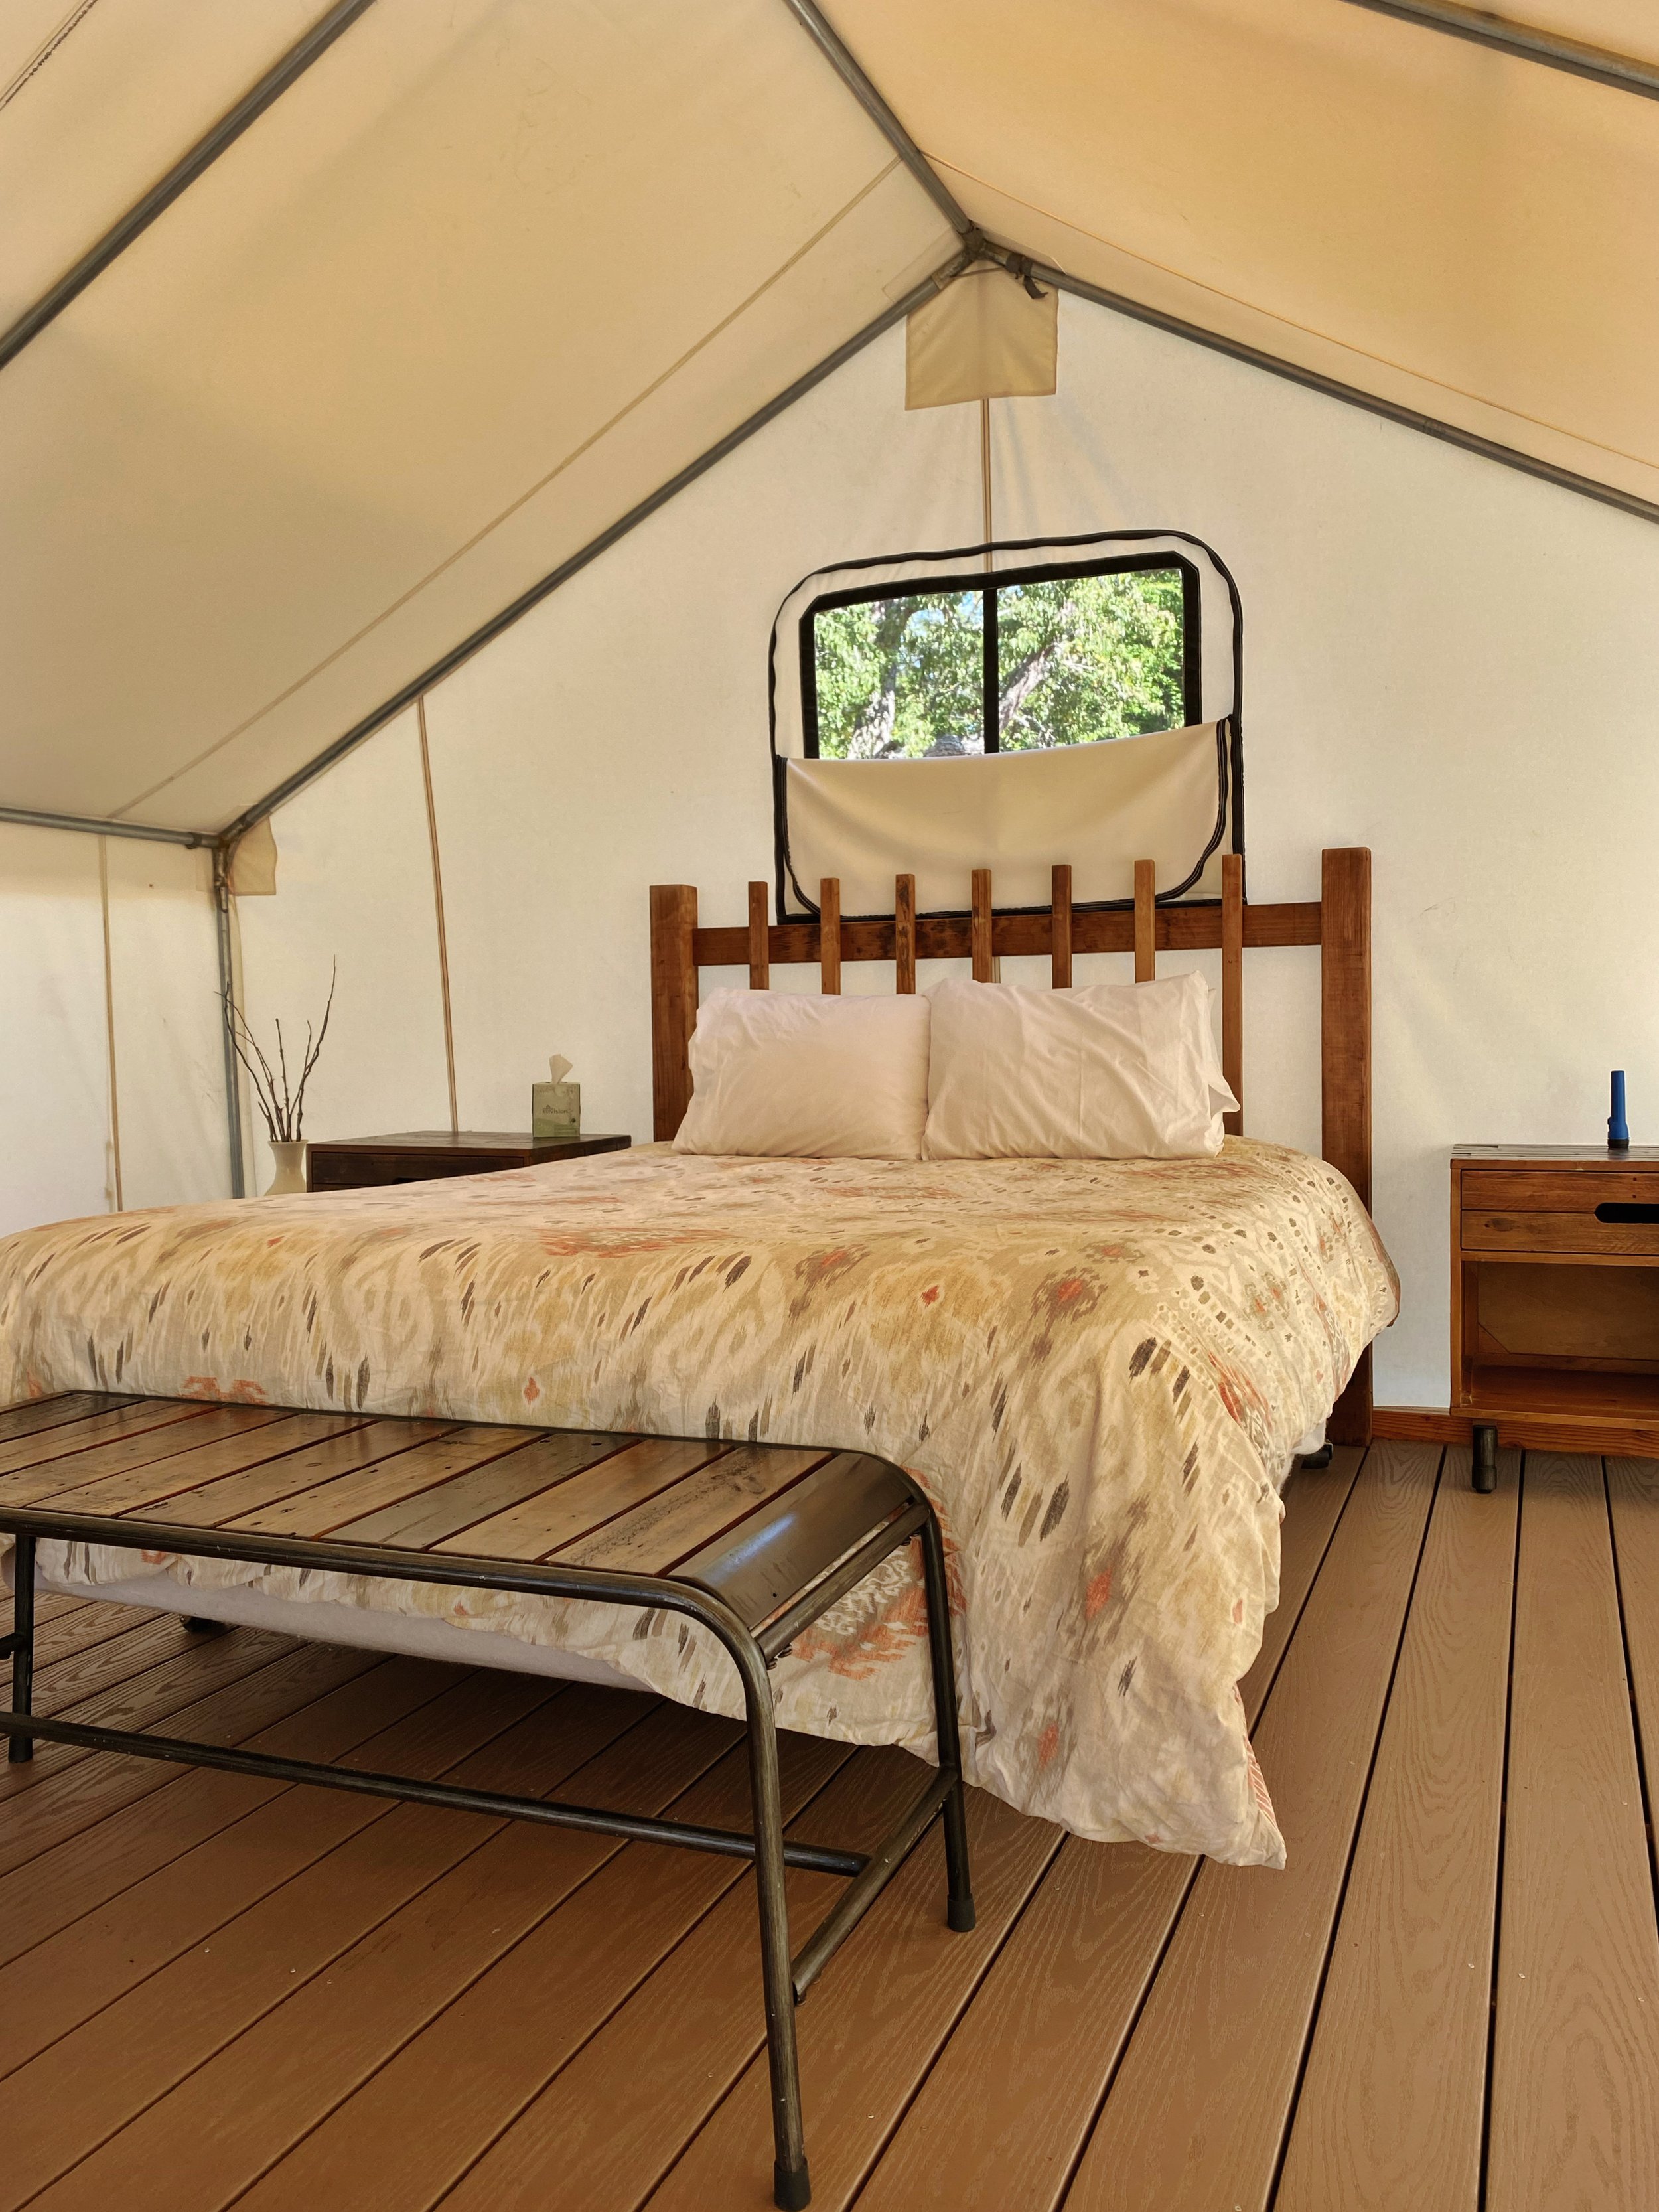 West Beach Resort Orcas Island Glamping Tent Interior